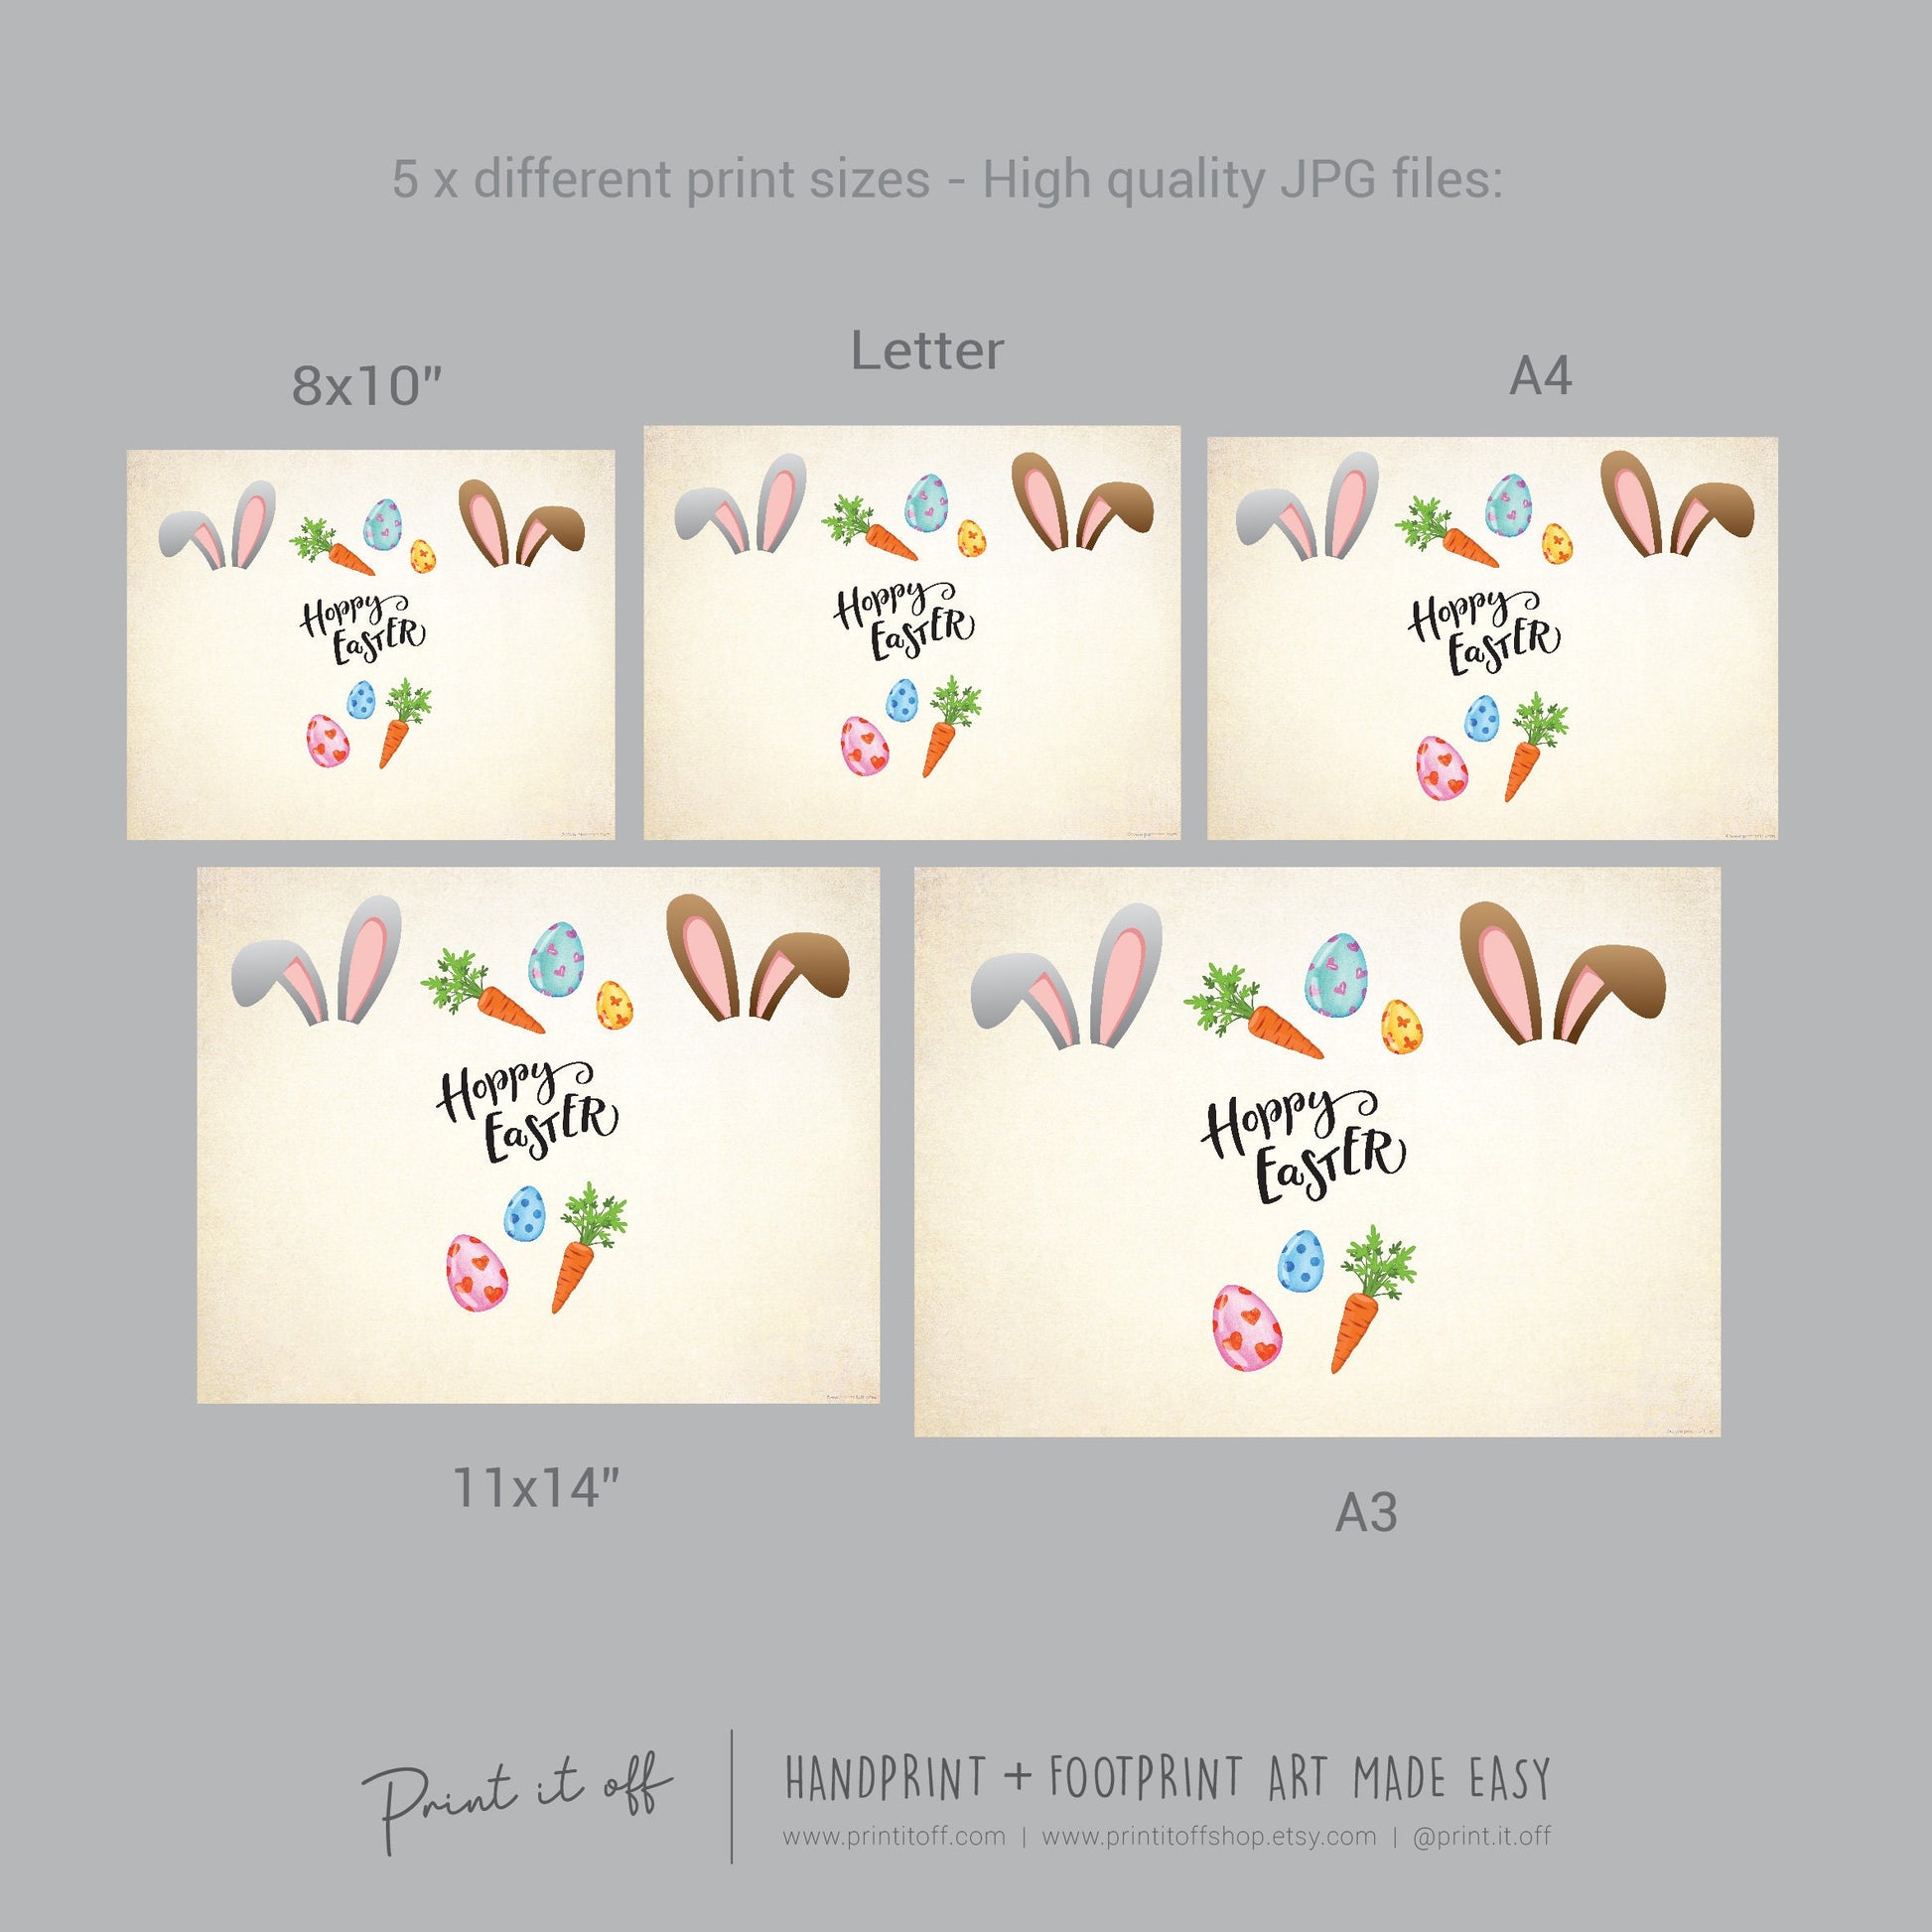 Hoppy Happy Easter Bunny / Footprint Hand Handprint Art / Baby Kids Toddler / Keepsake Memory Craft DIY Card / Print It Off